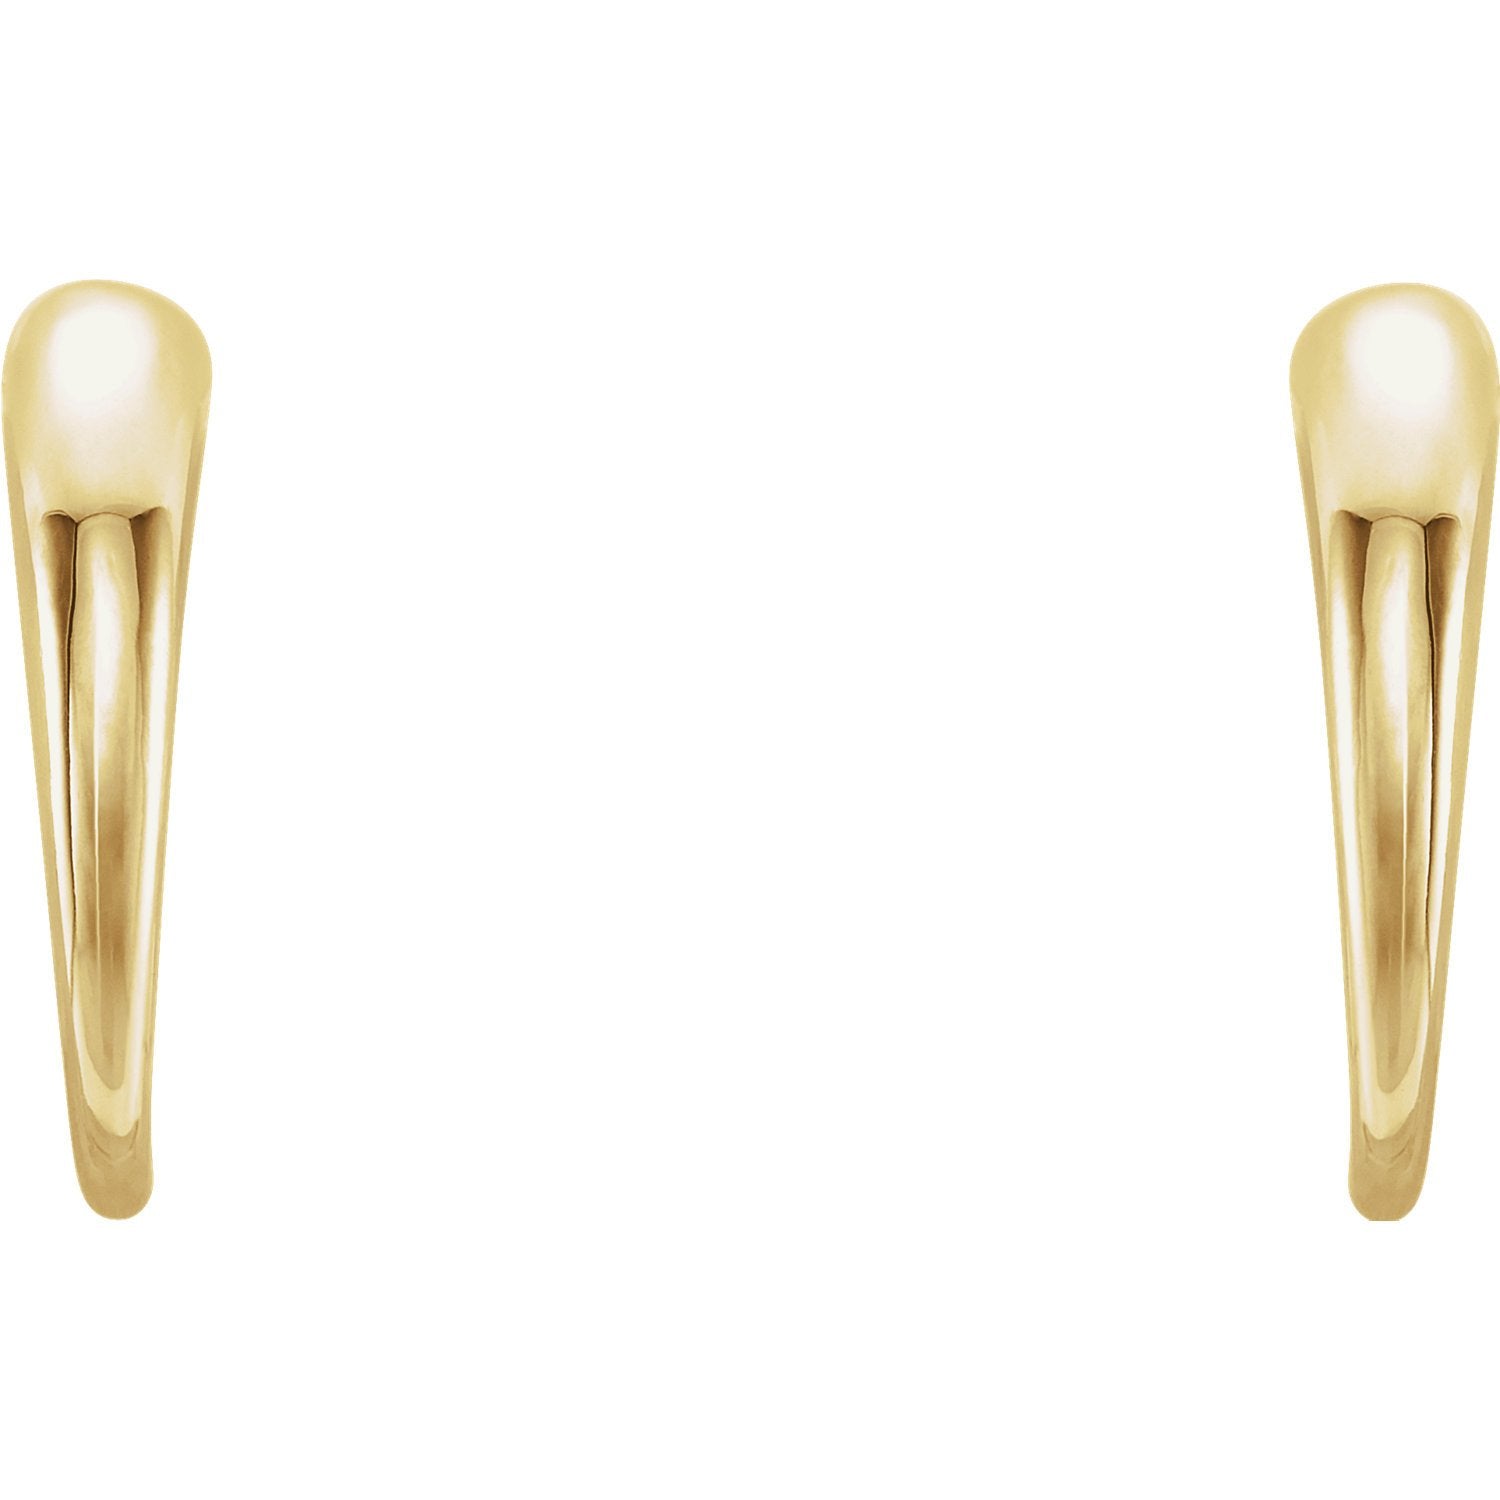 Horn Shaped J-Hoop Earrings - 14K Yellow Gold